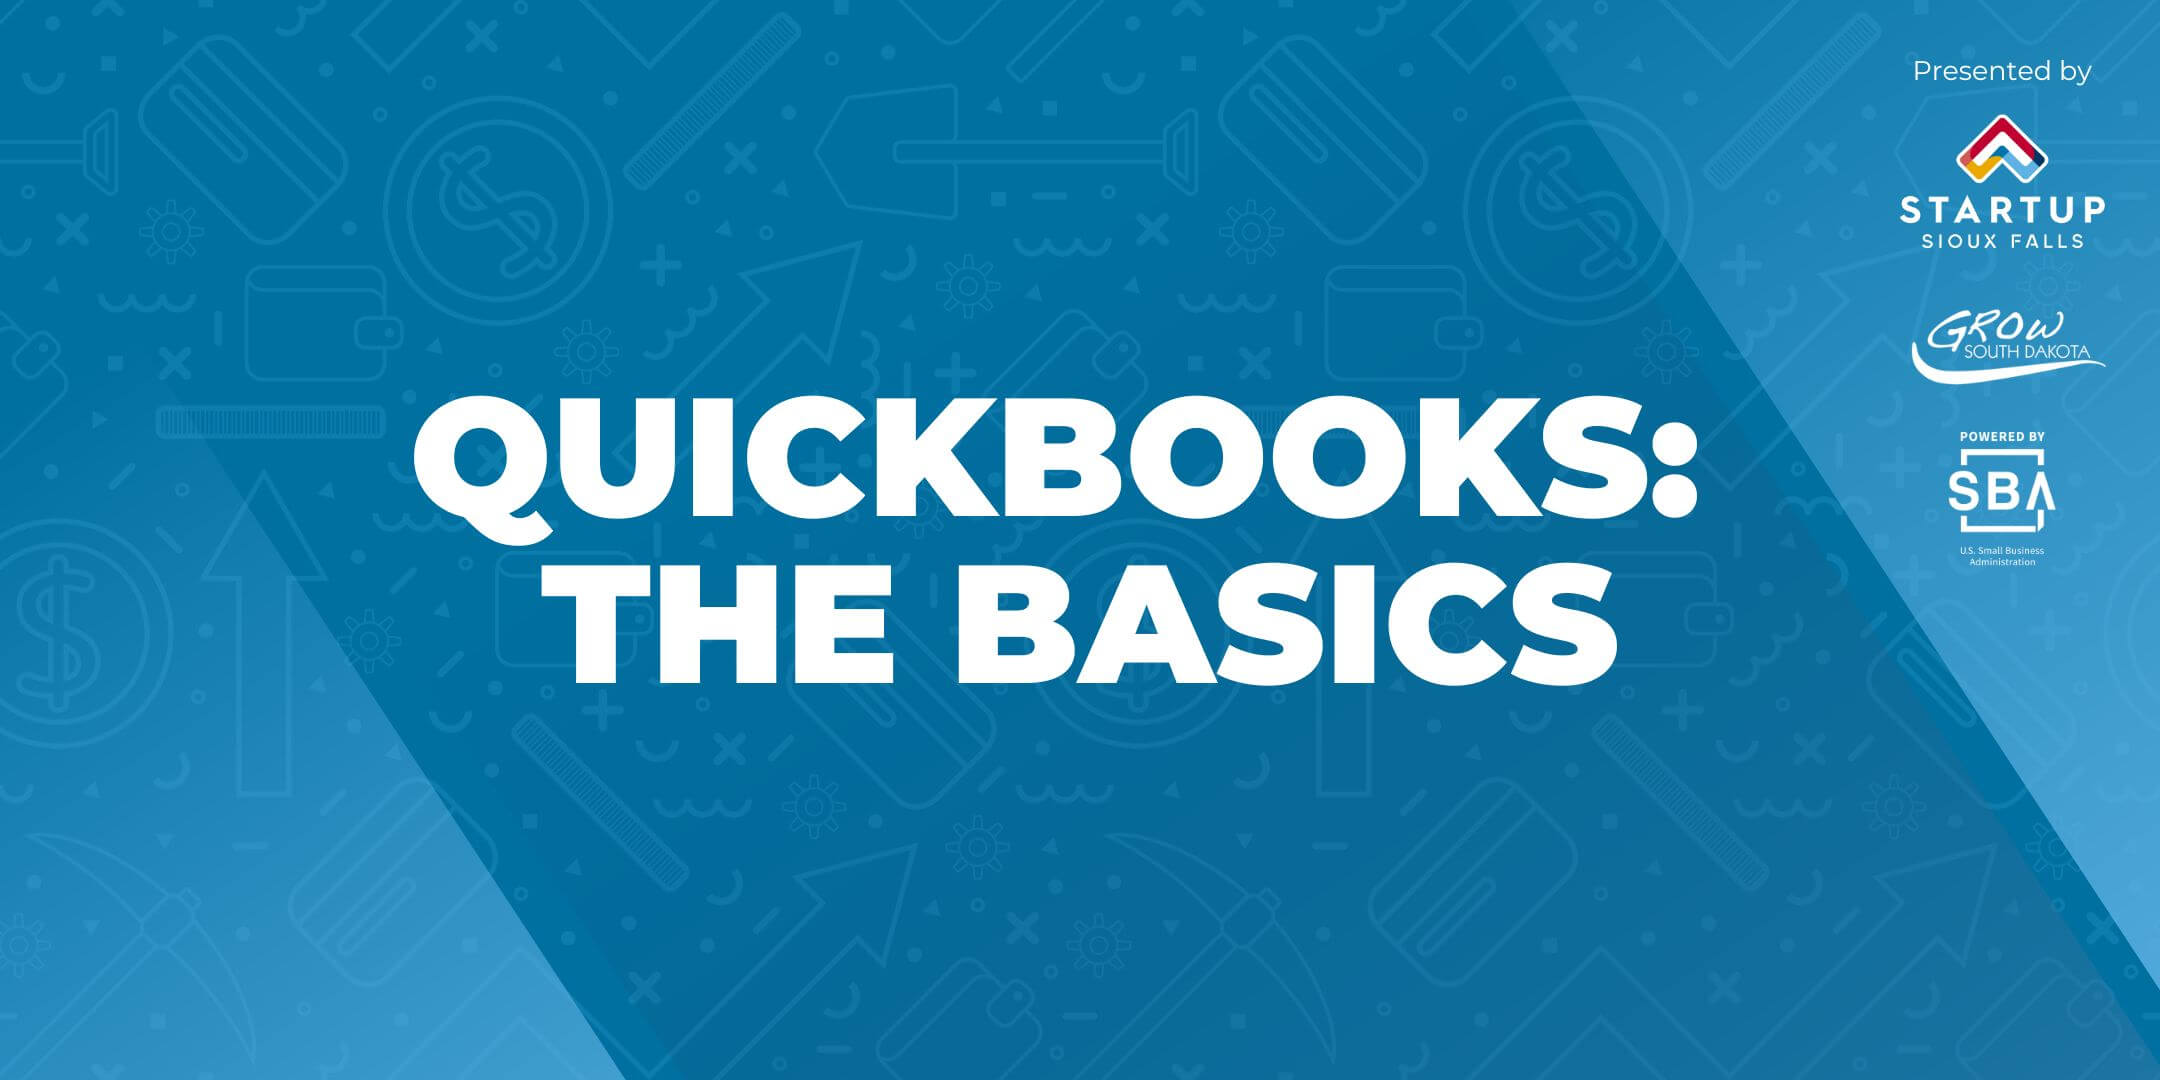 quickbooks: the basics